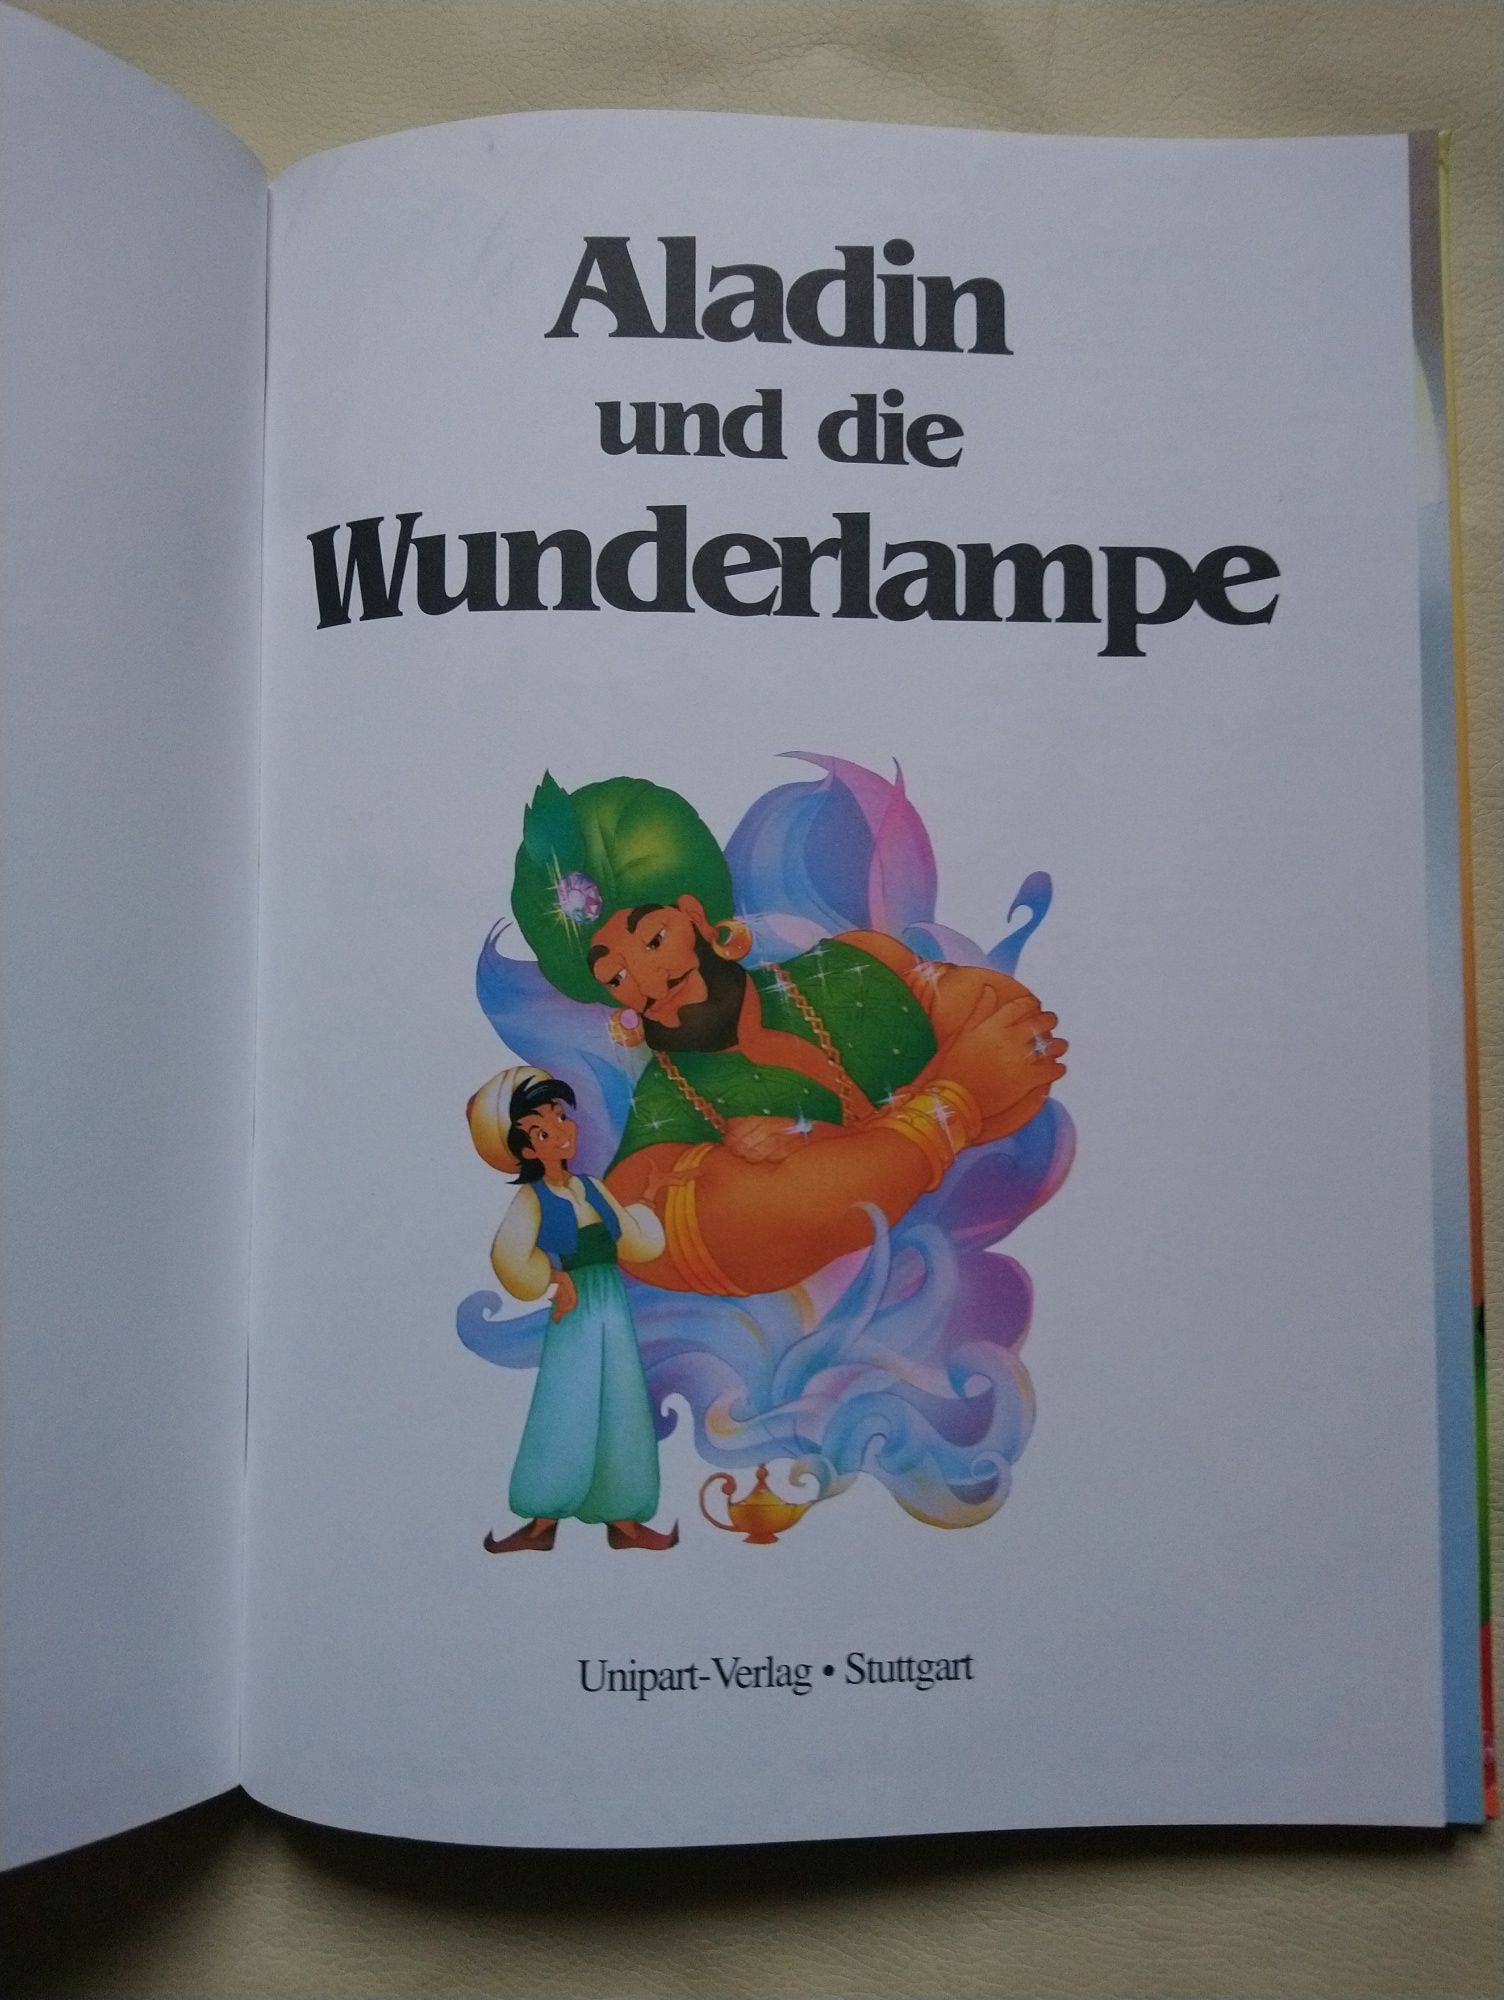 Книга Aladin und die Wunderlampe на німецькій мові